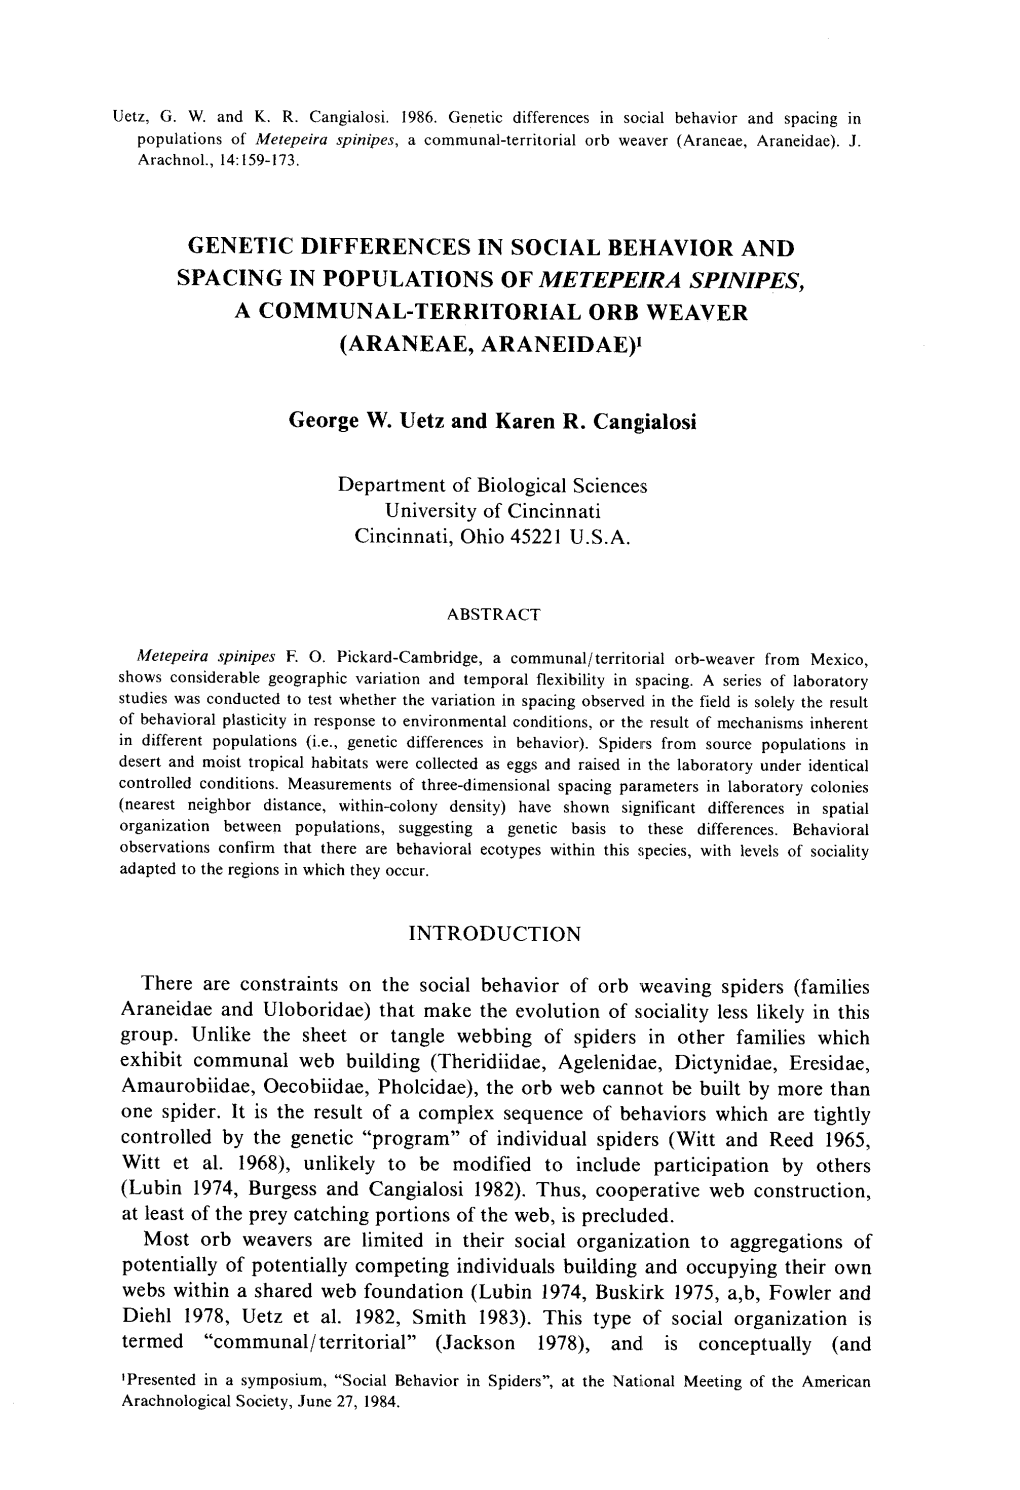 Genetic Differences in Social Behavior and Spacing I N Populations of Metepeira Spinipes, a Communal-Territorial Orb Weaver (Araneae, Araneidae)